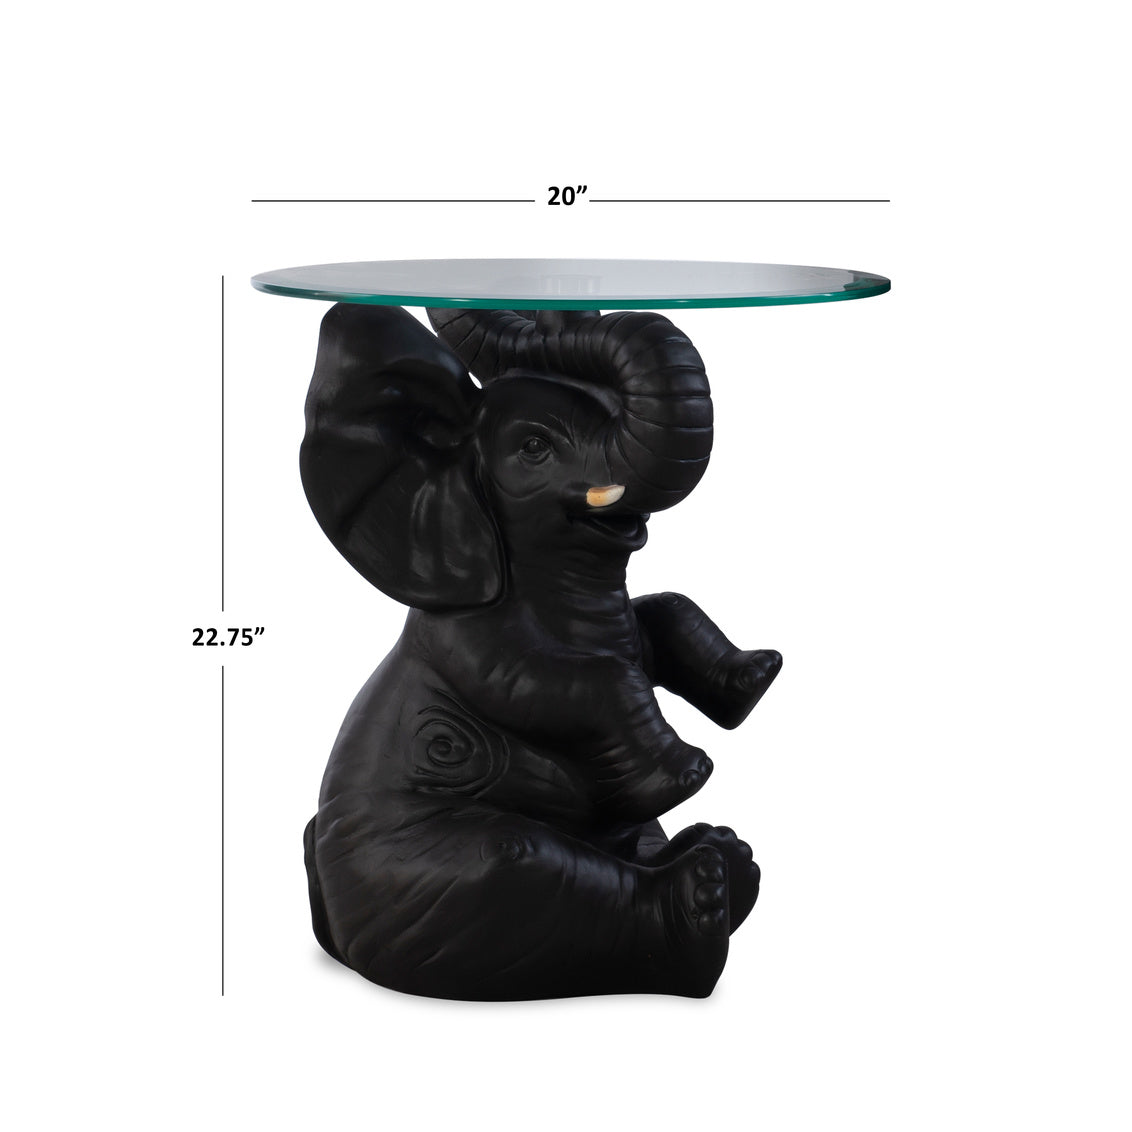 Ernie Elephant Side Table Base and Glass Top